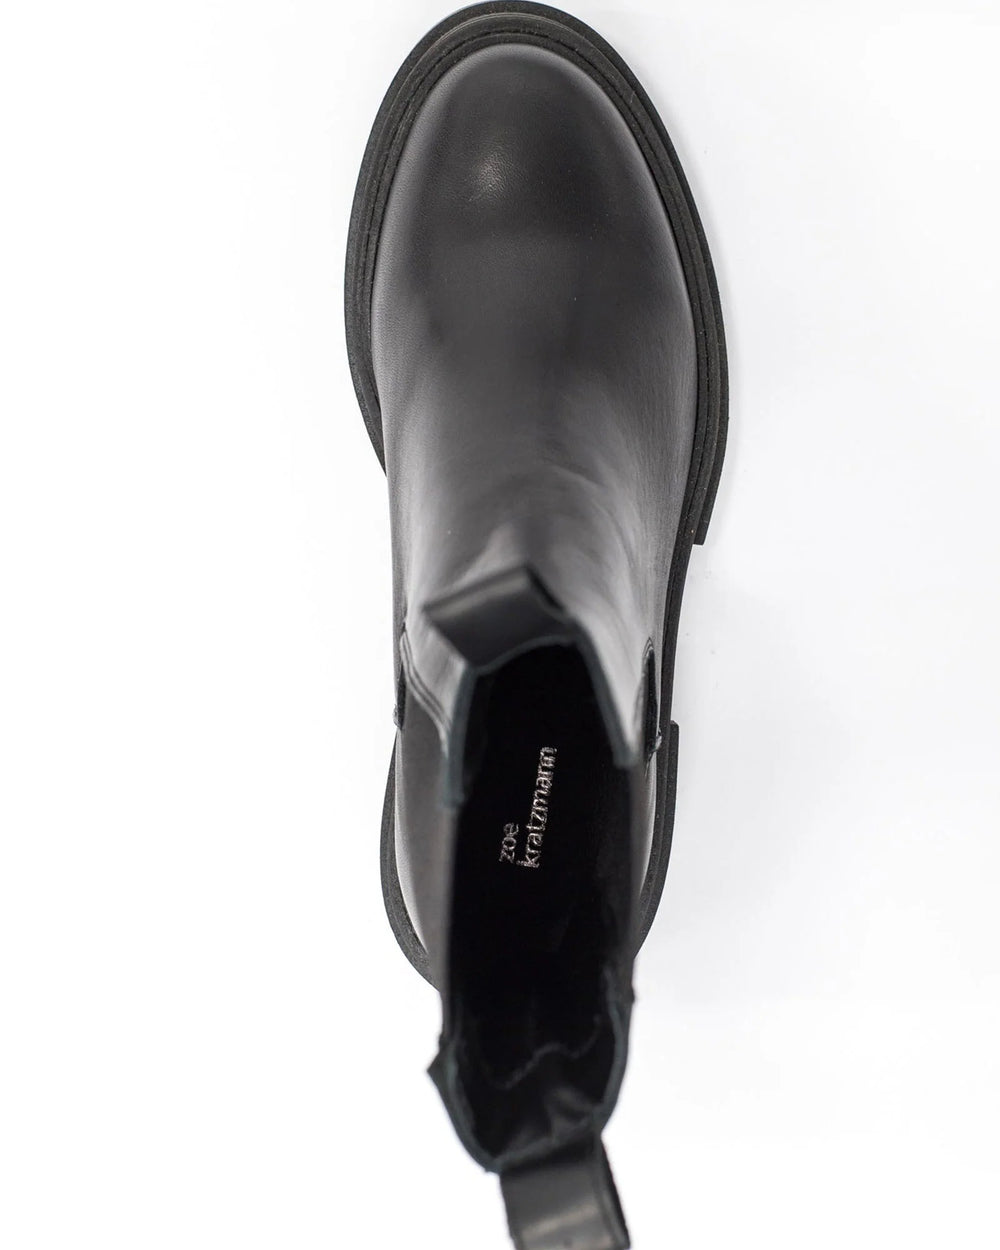 Derive Boot - Black Leather Shoes Zoe Kratzmann   